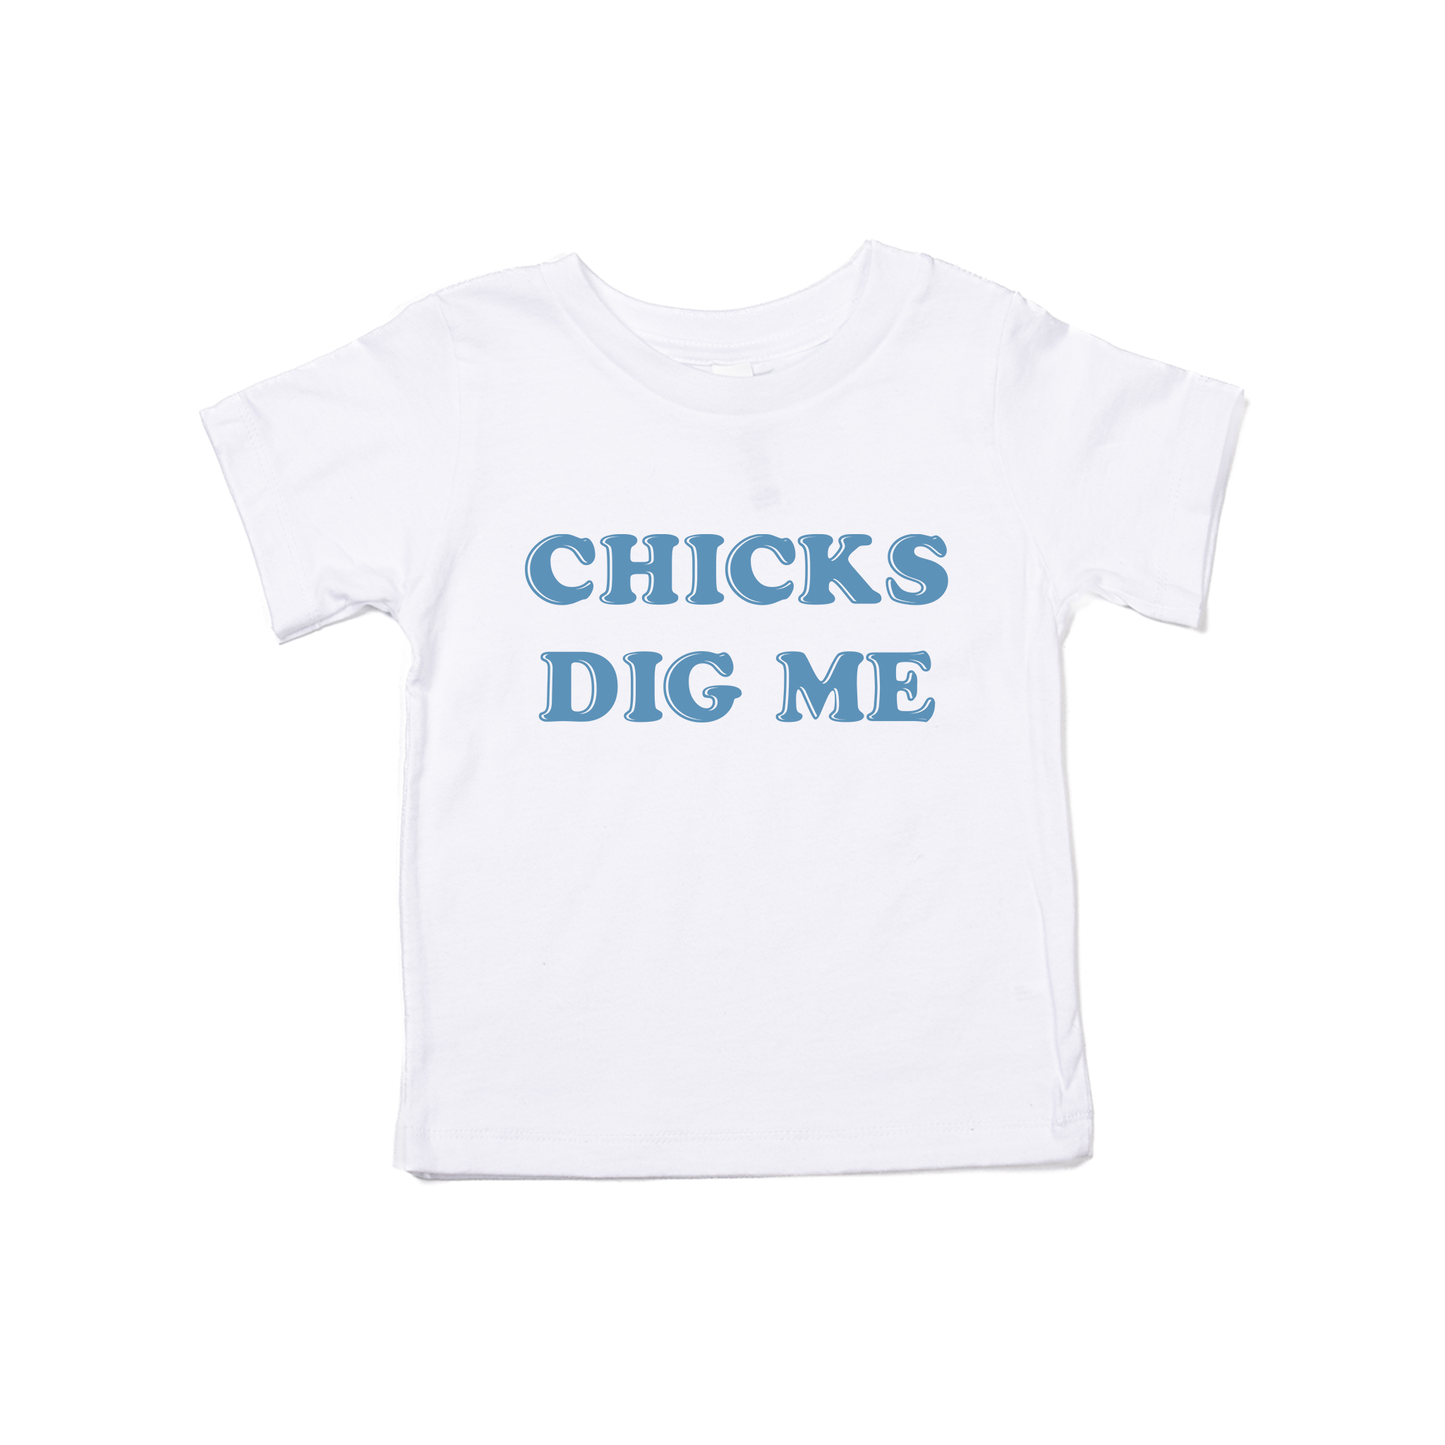 Chicks Dig Me - Kids Tee (White)